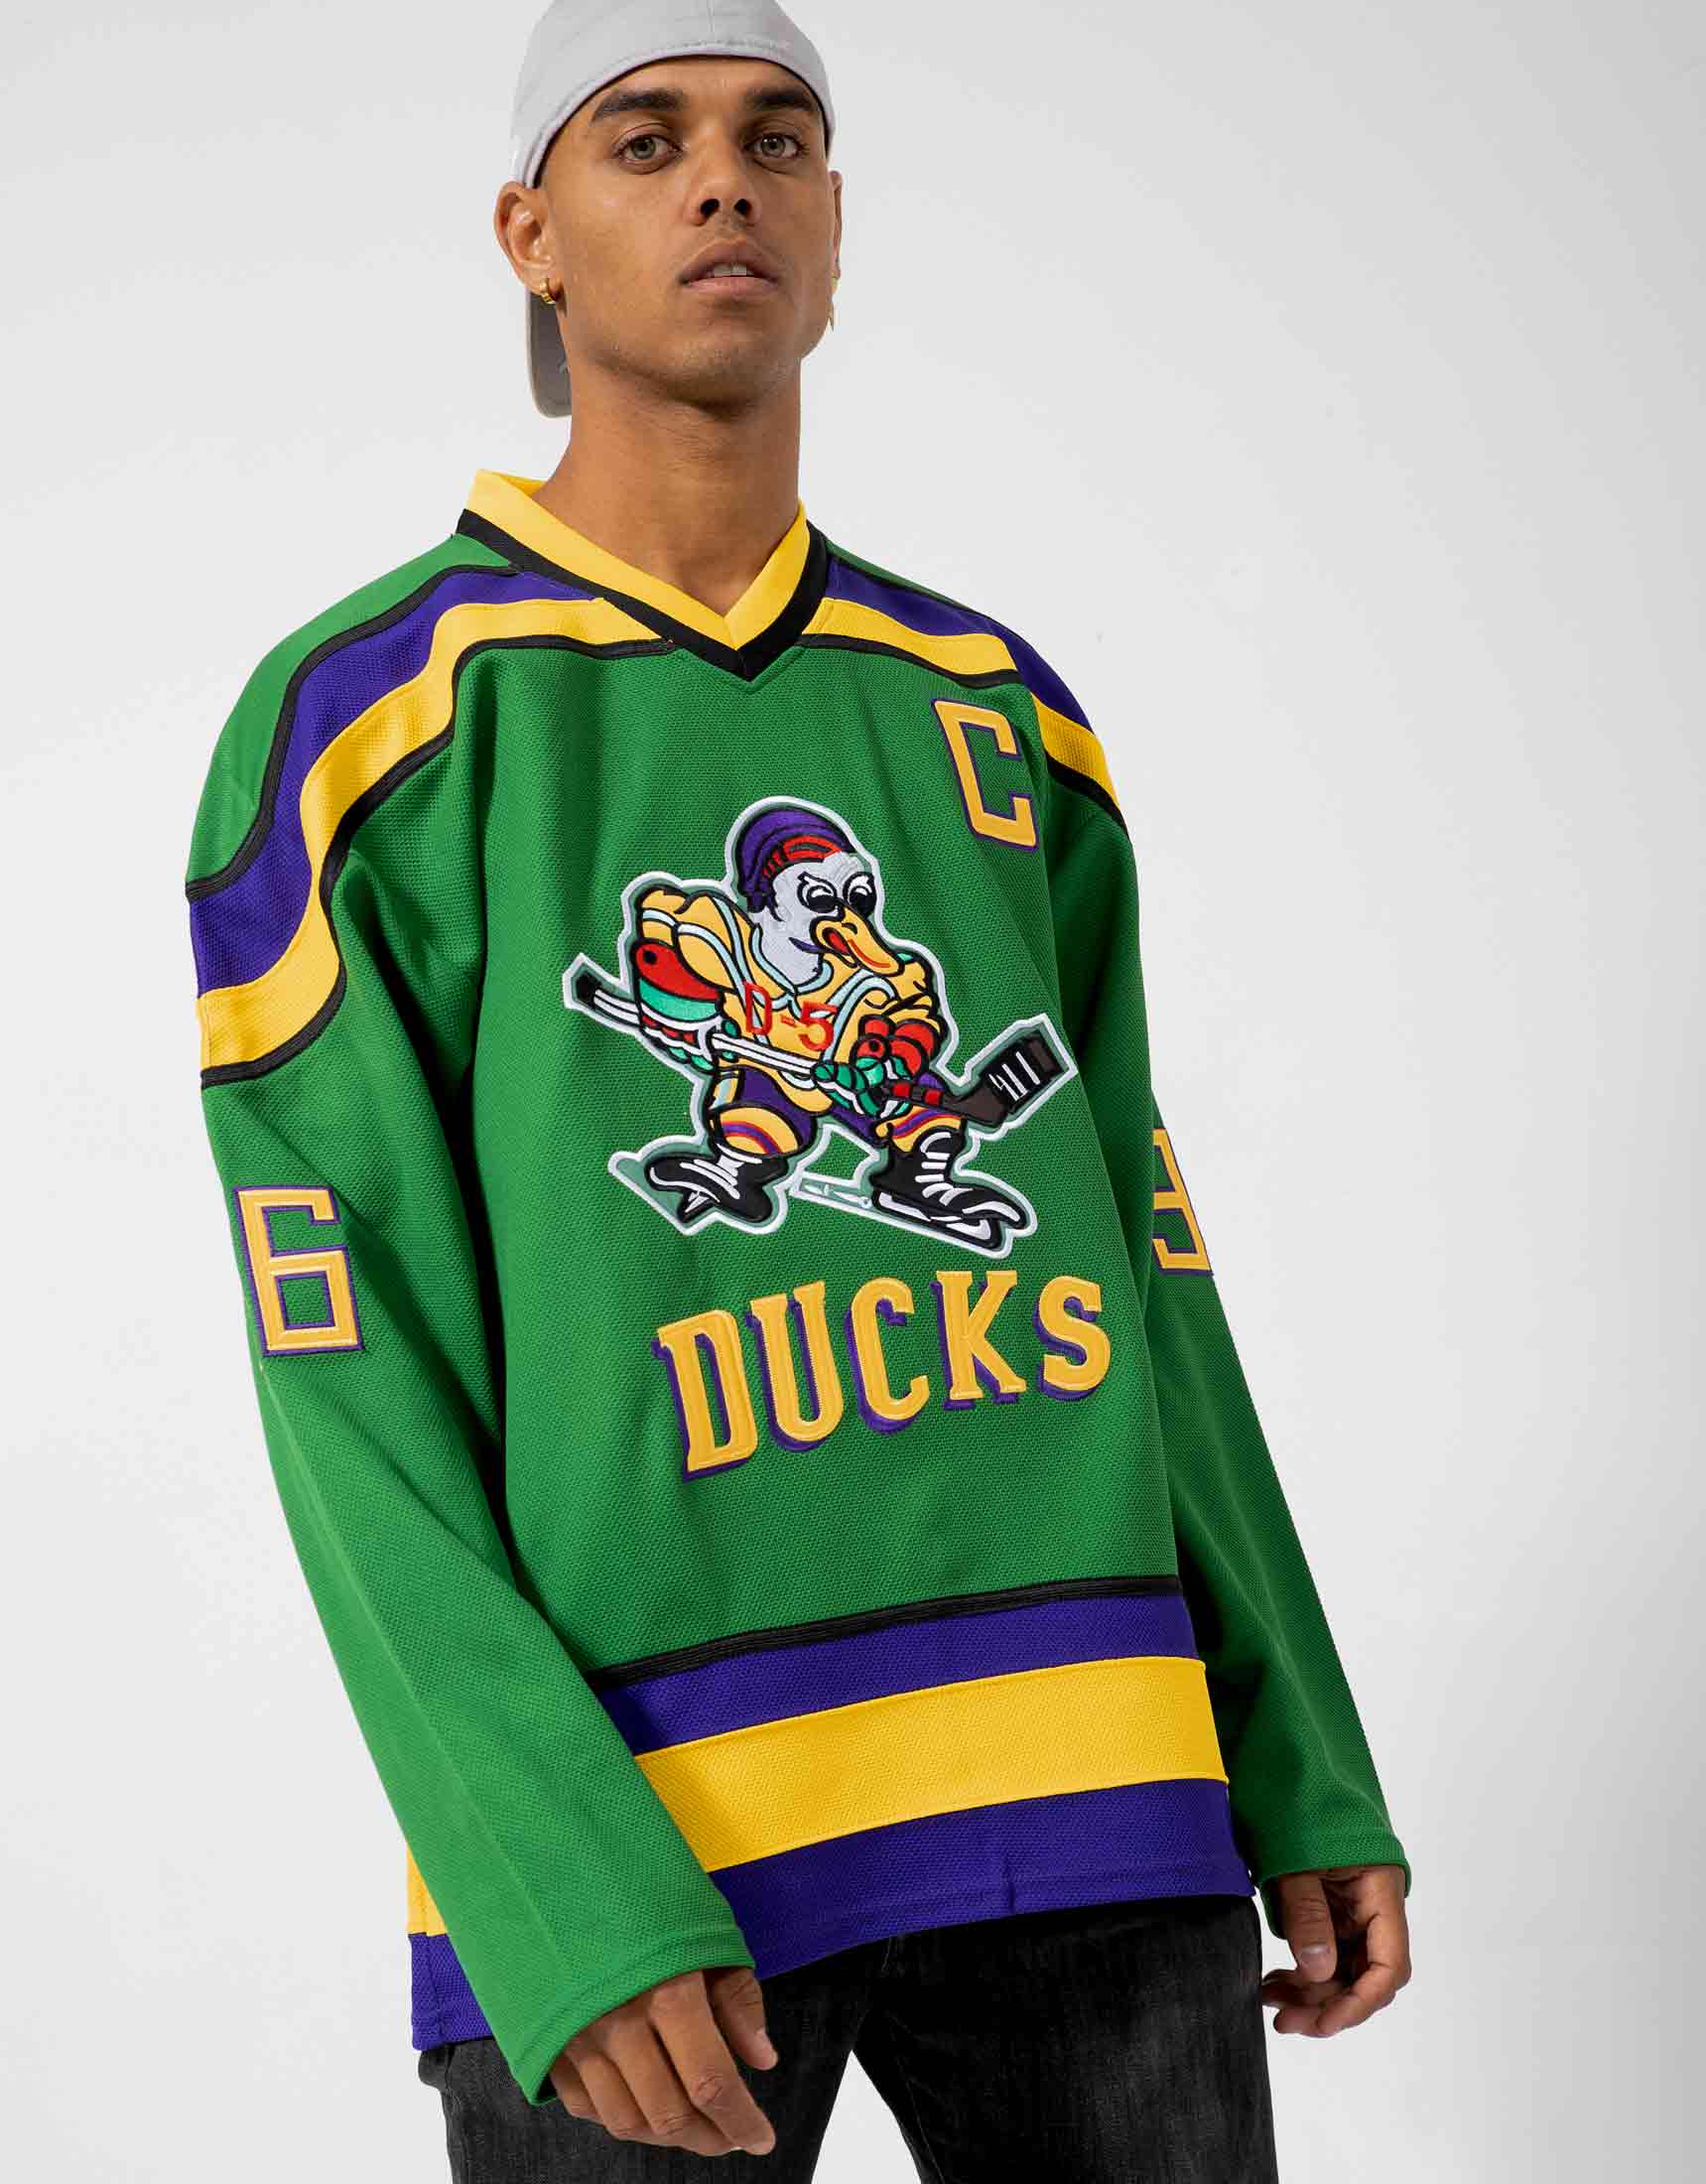 CGUBJI Men's #96 Charlie Conway Mighty Ducks Team USA Movie Hockey Jersey Stitched